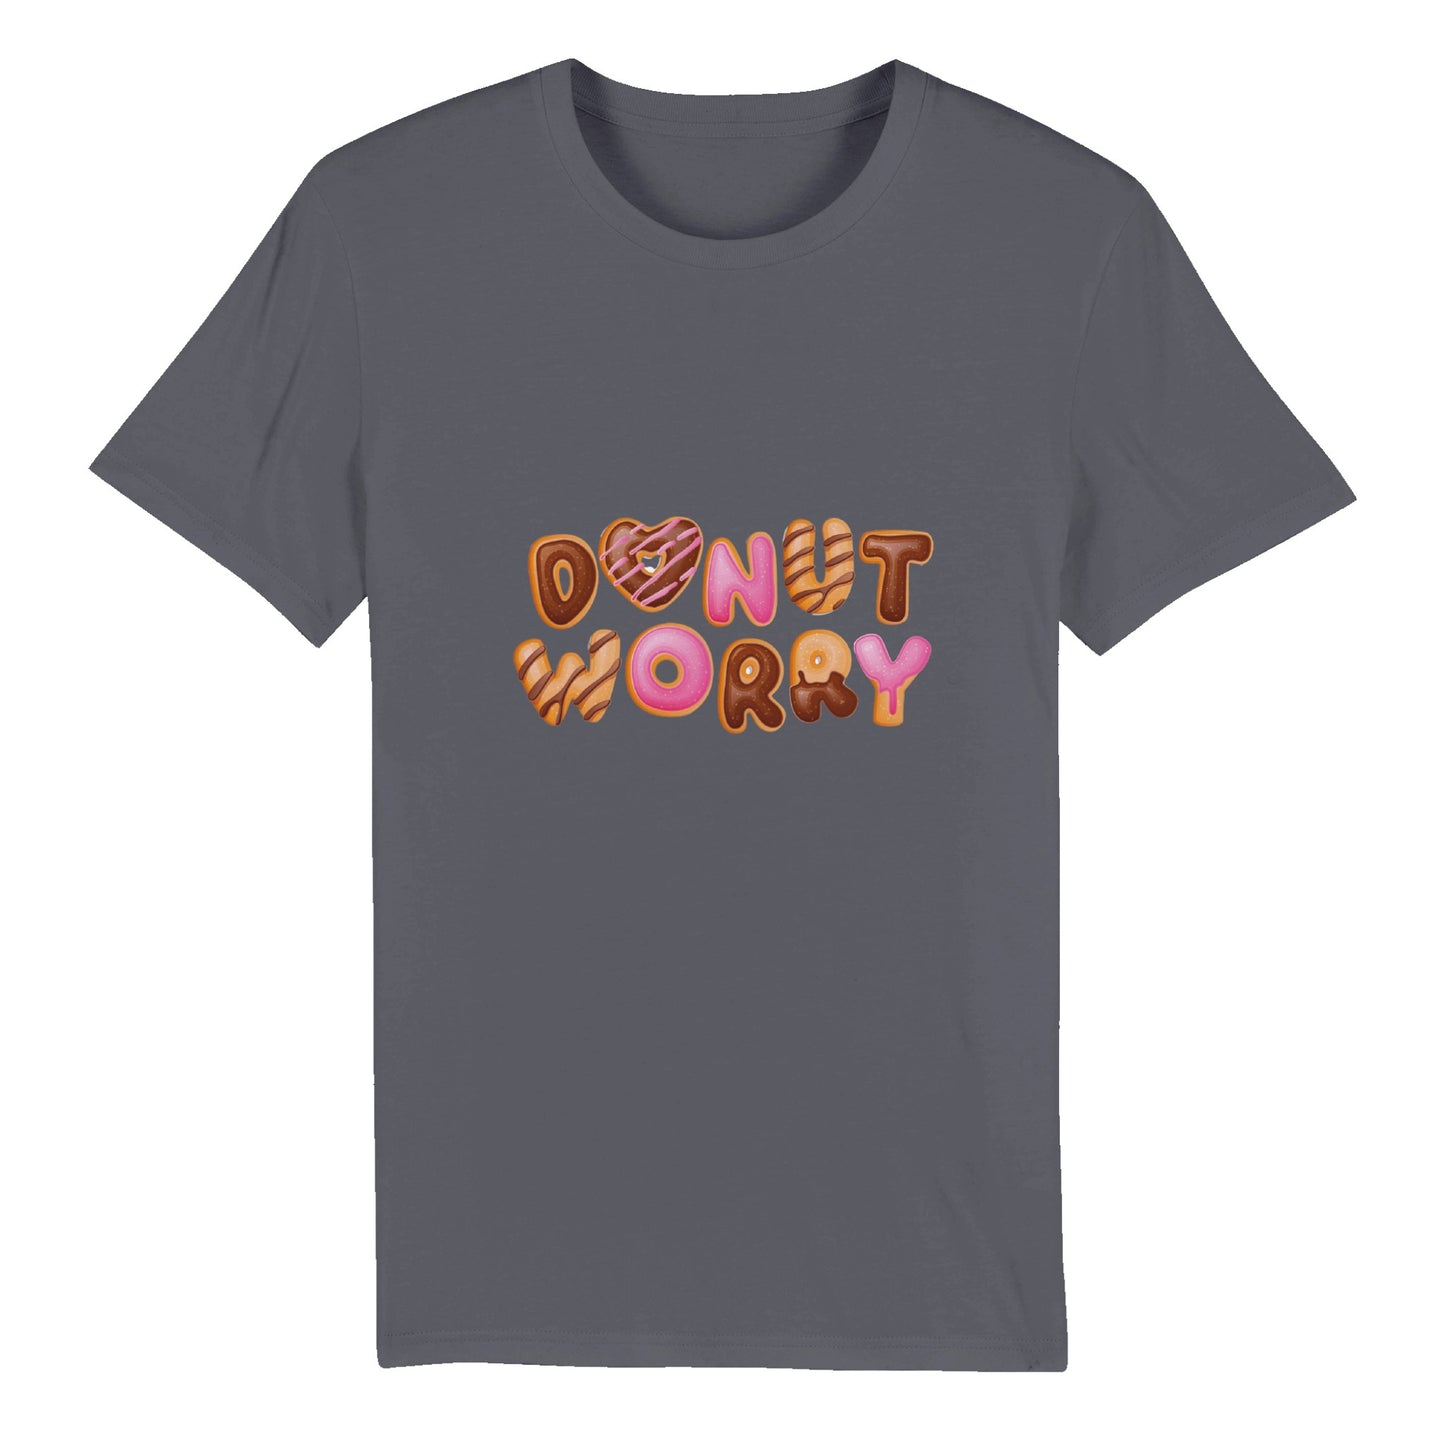 100% Organic Unisex T-shirt/Donut-Worry